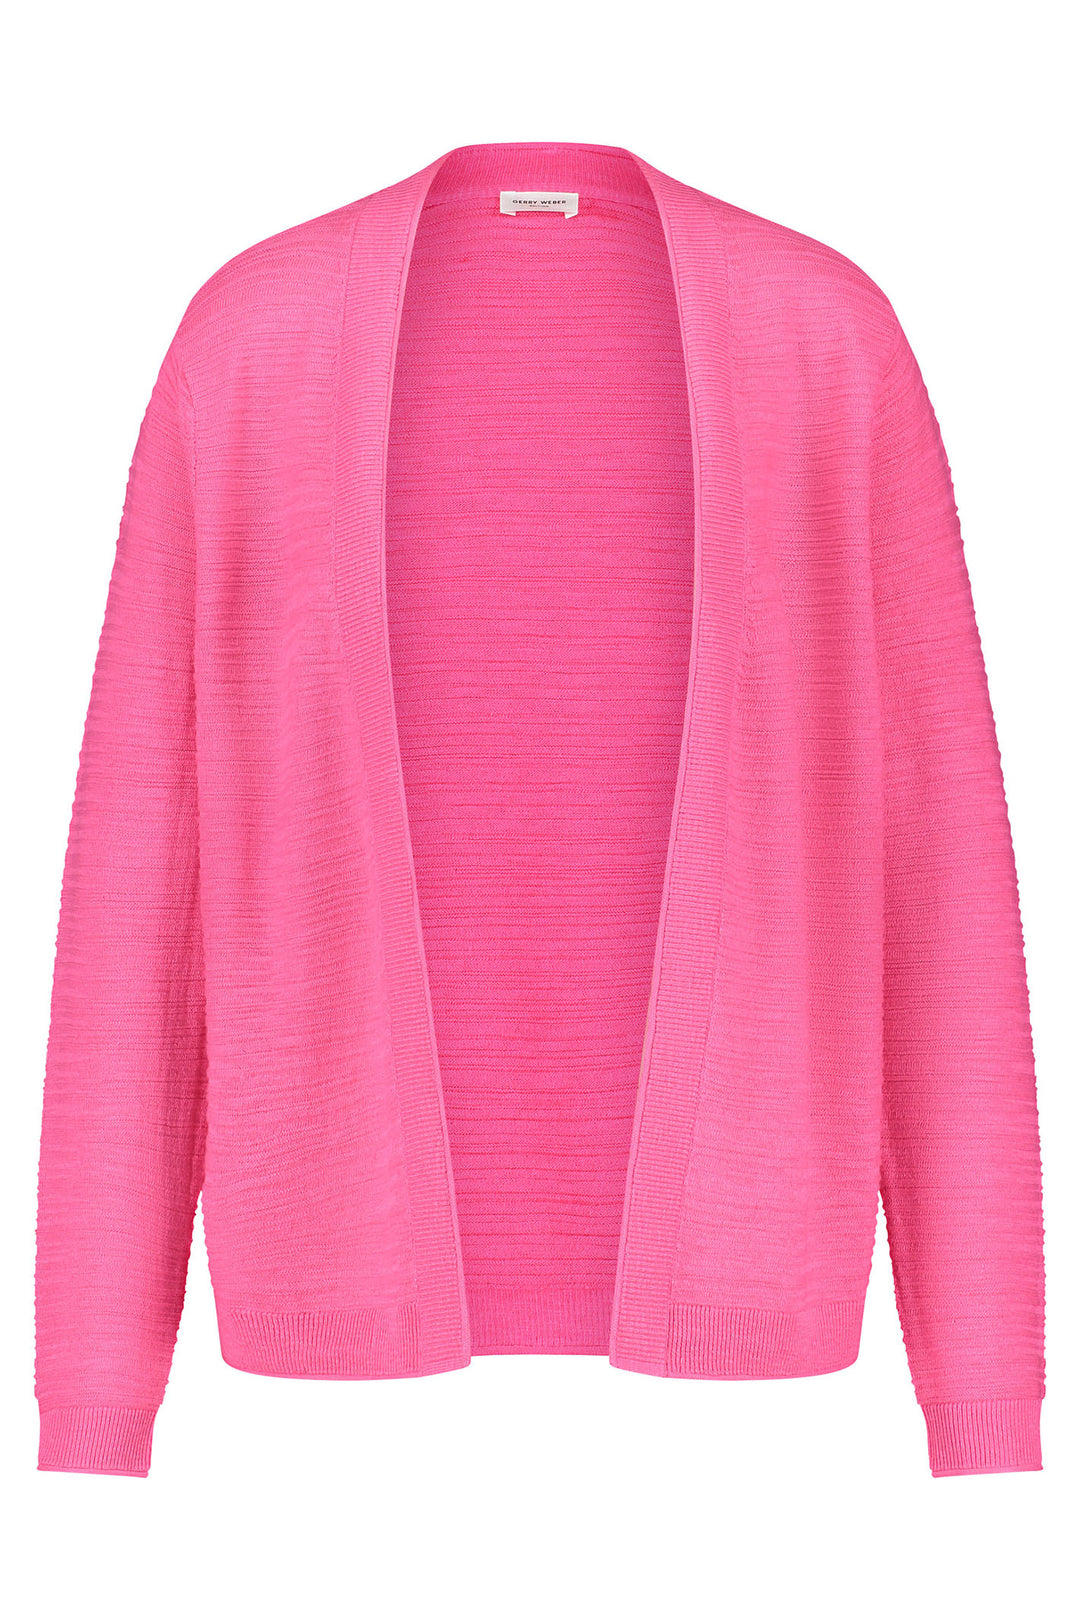 Gerry Weber 230217 Solar Pink Linen Blend Cardigan - Experience Boutique